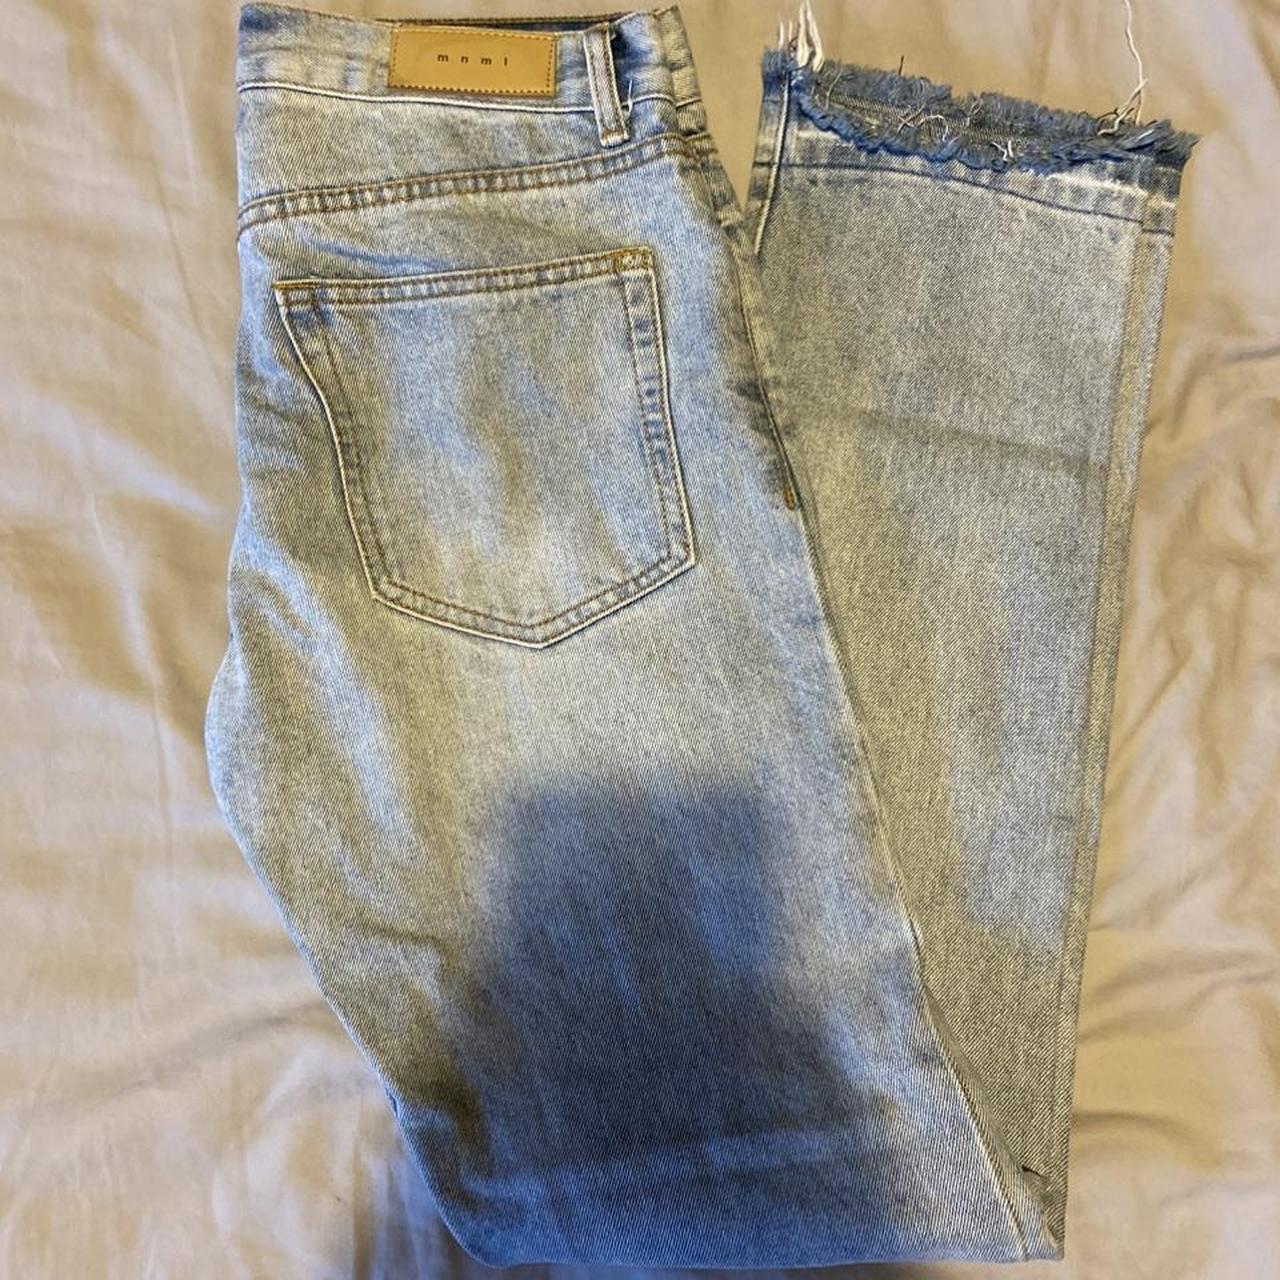 Mnml jeans ‘slim’ Acid wash Distressed - Depop